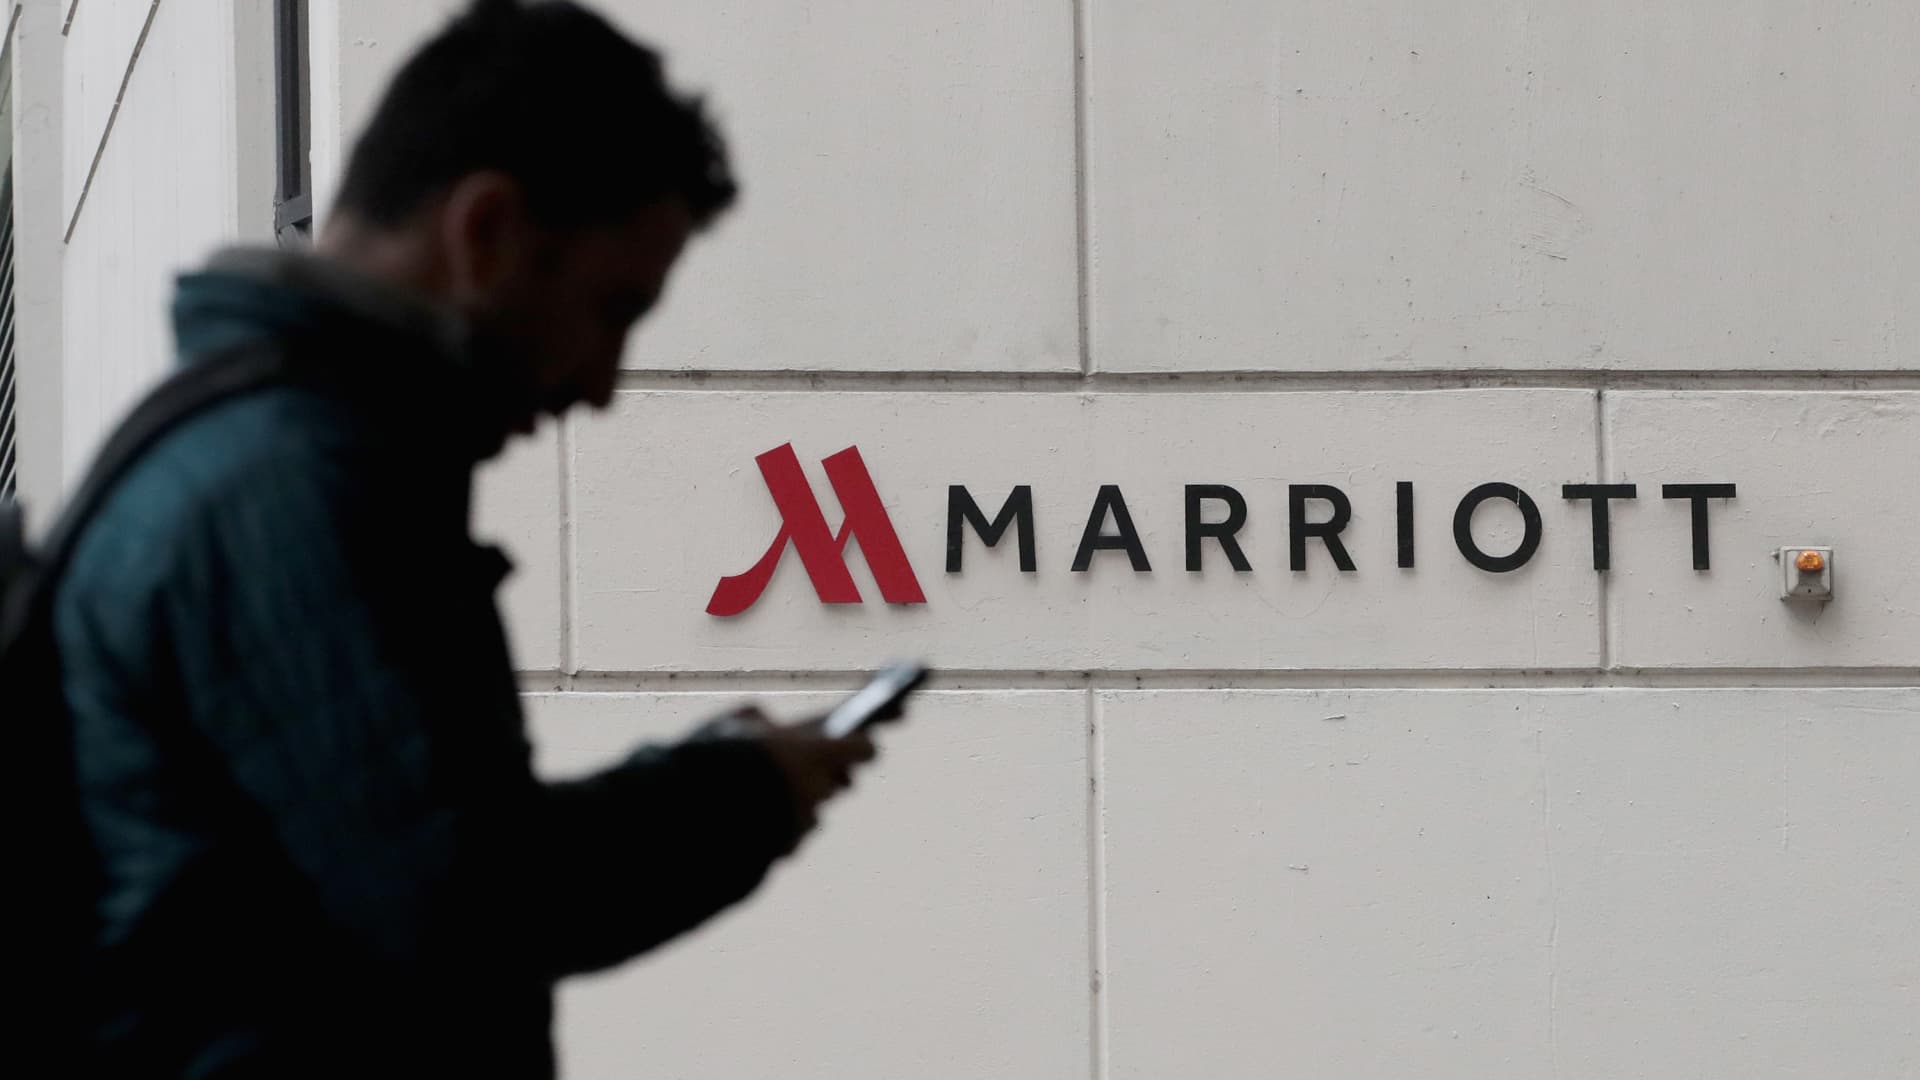 Marriott built an 'Airbnb' before coronavirus crashed travel. Did it help?